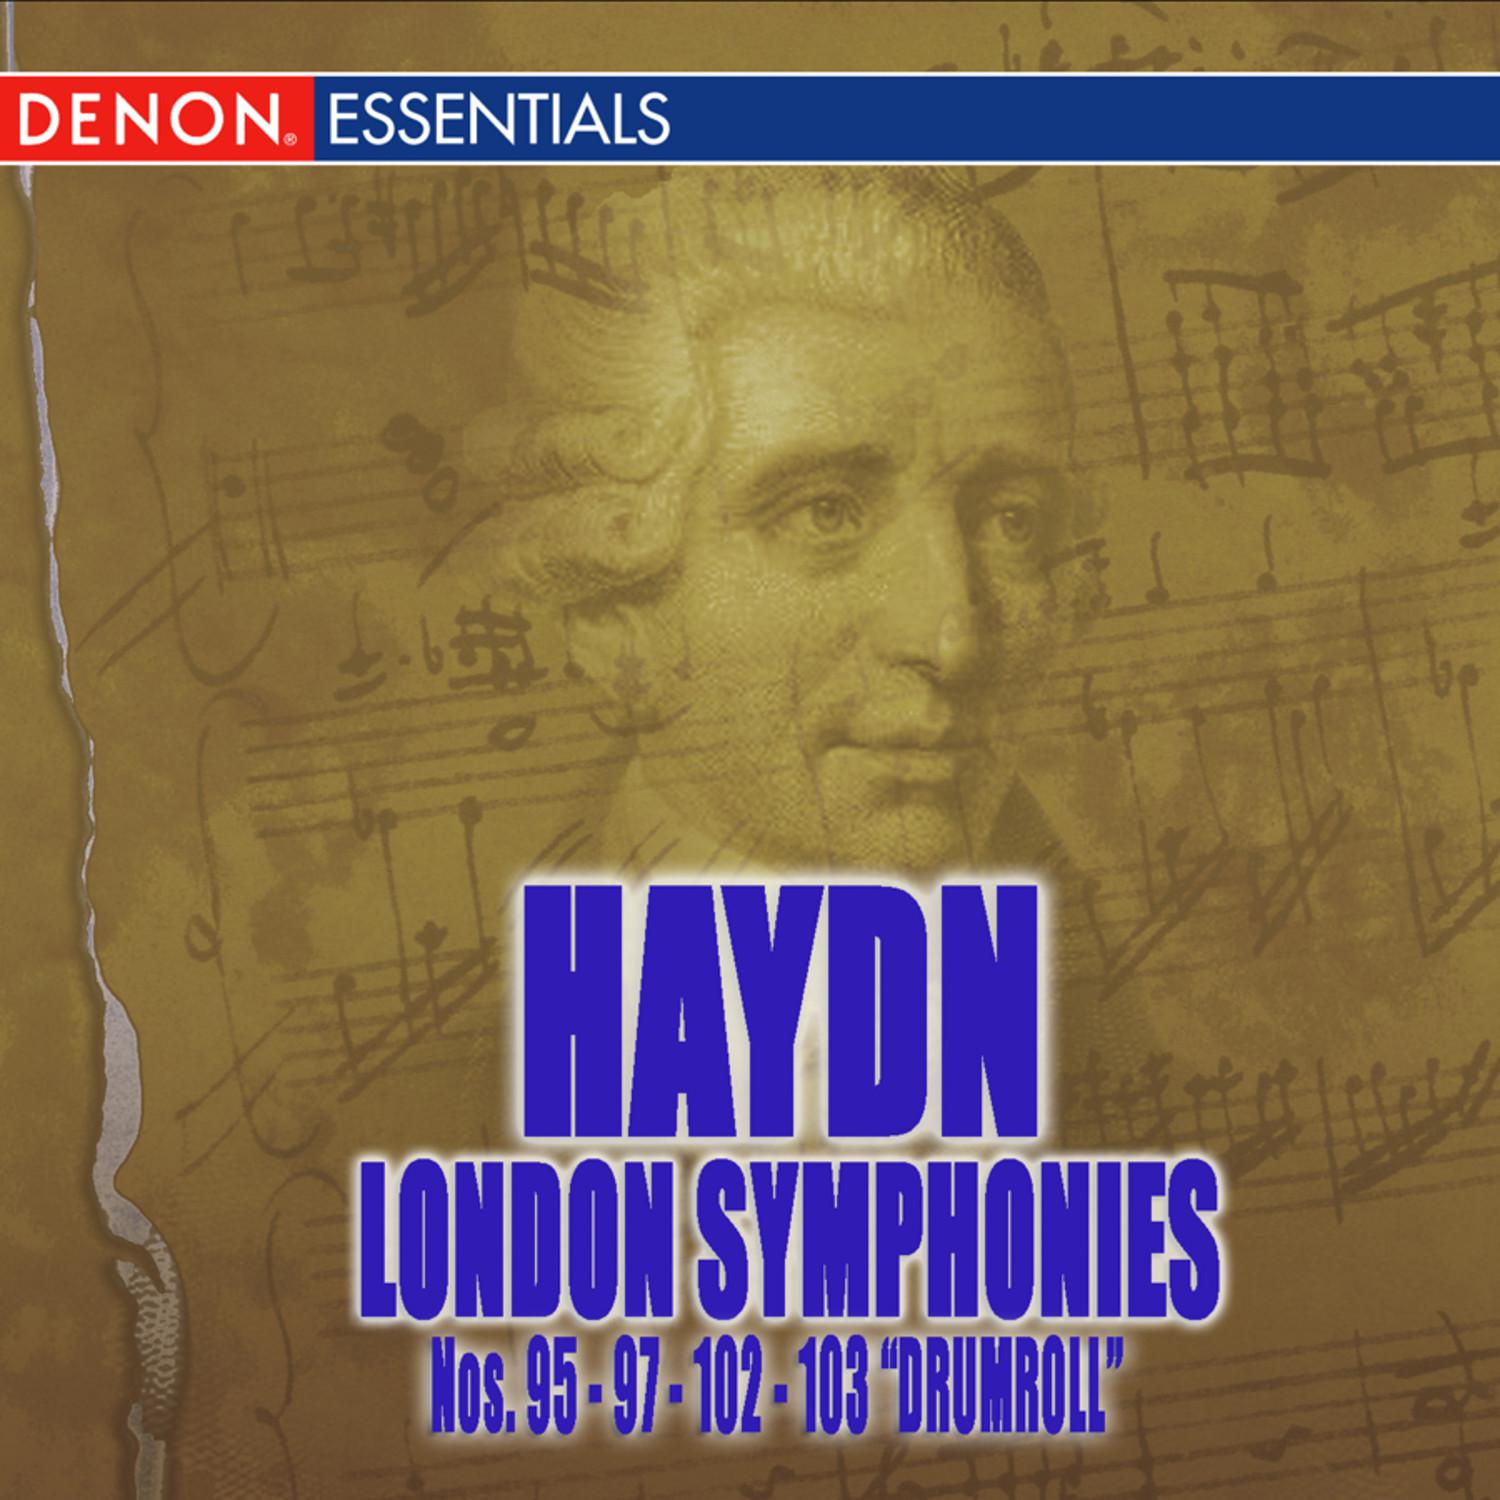 Haydn Symphony No. 95 in C Minor: I. Allegro moderato; sonata form